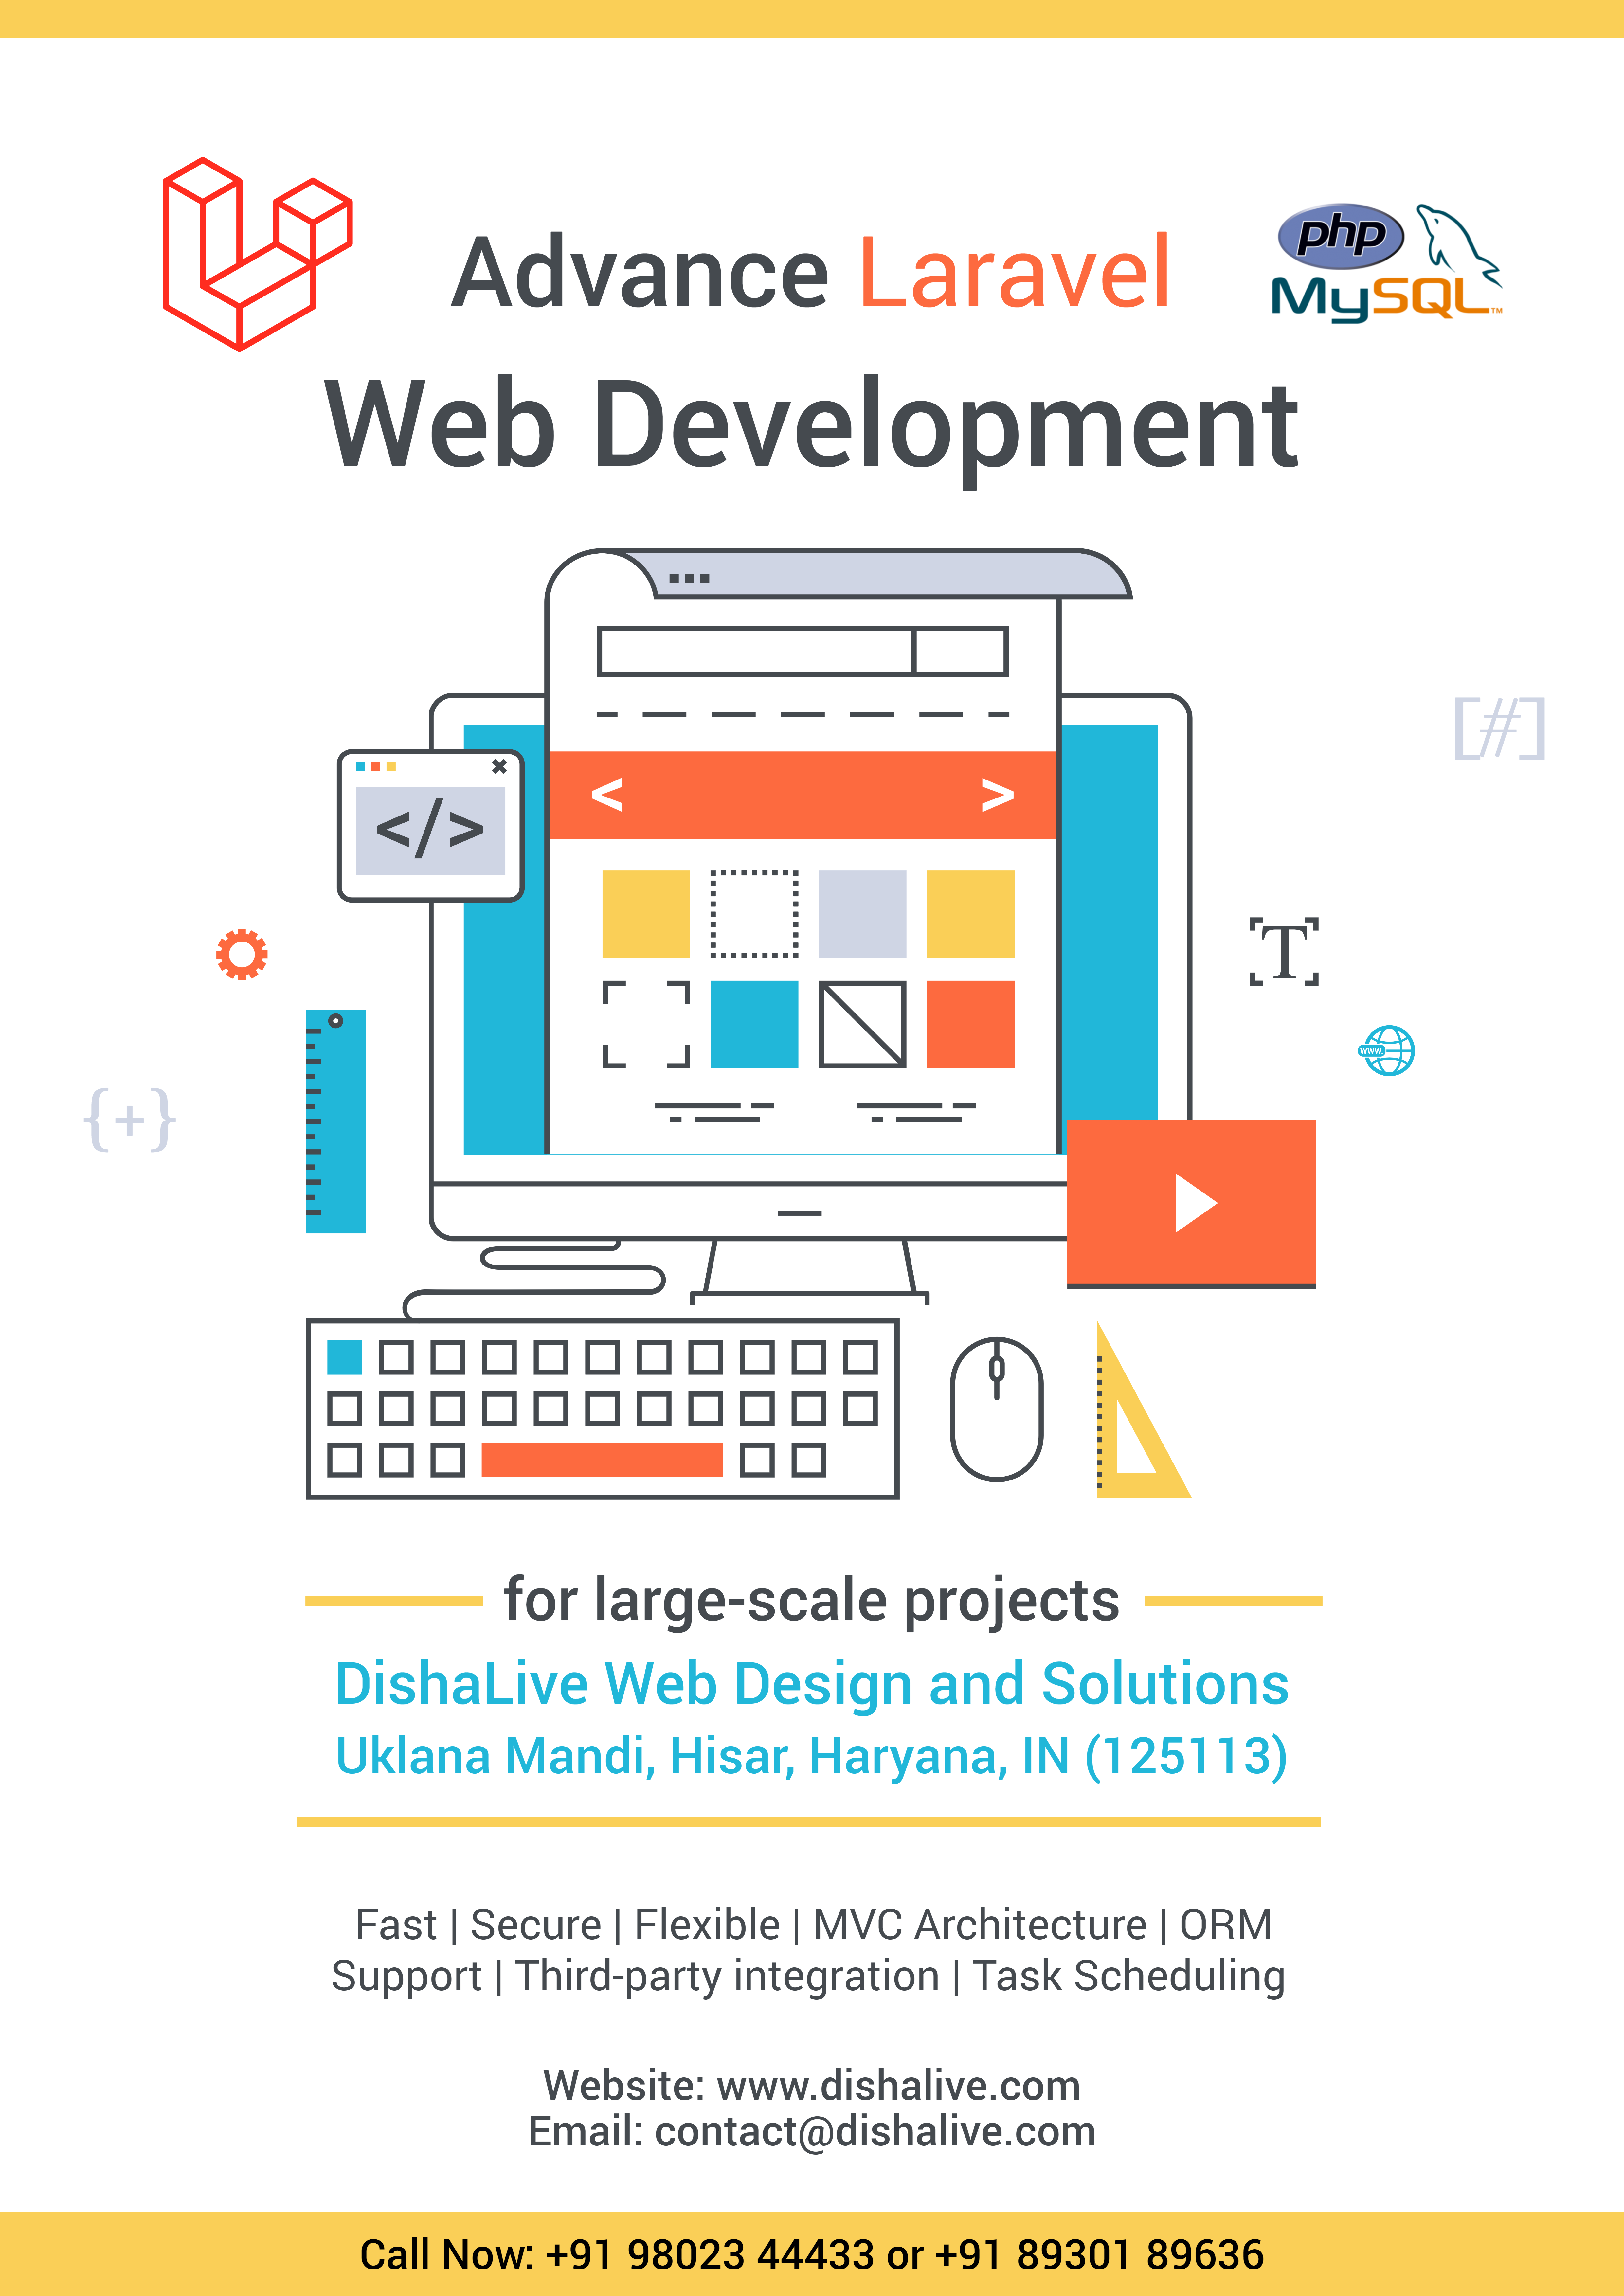 Advance Laravel Web Developers available in DishaLive Web Design and Solutions Uklana Mandi Hisar Haryana